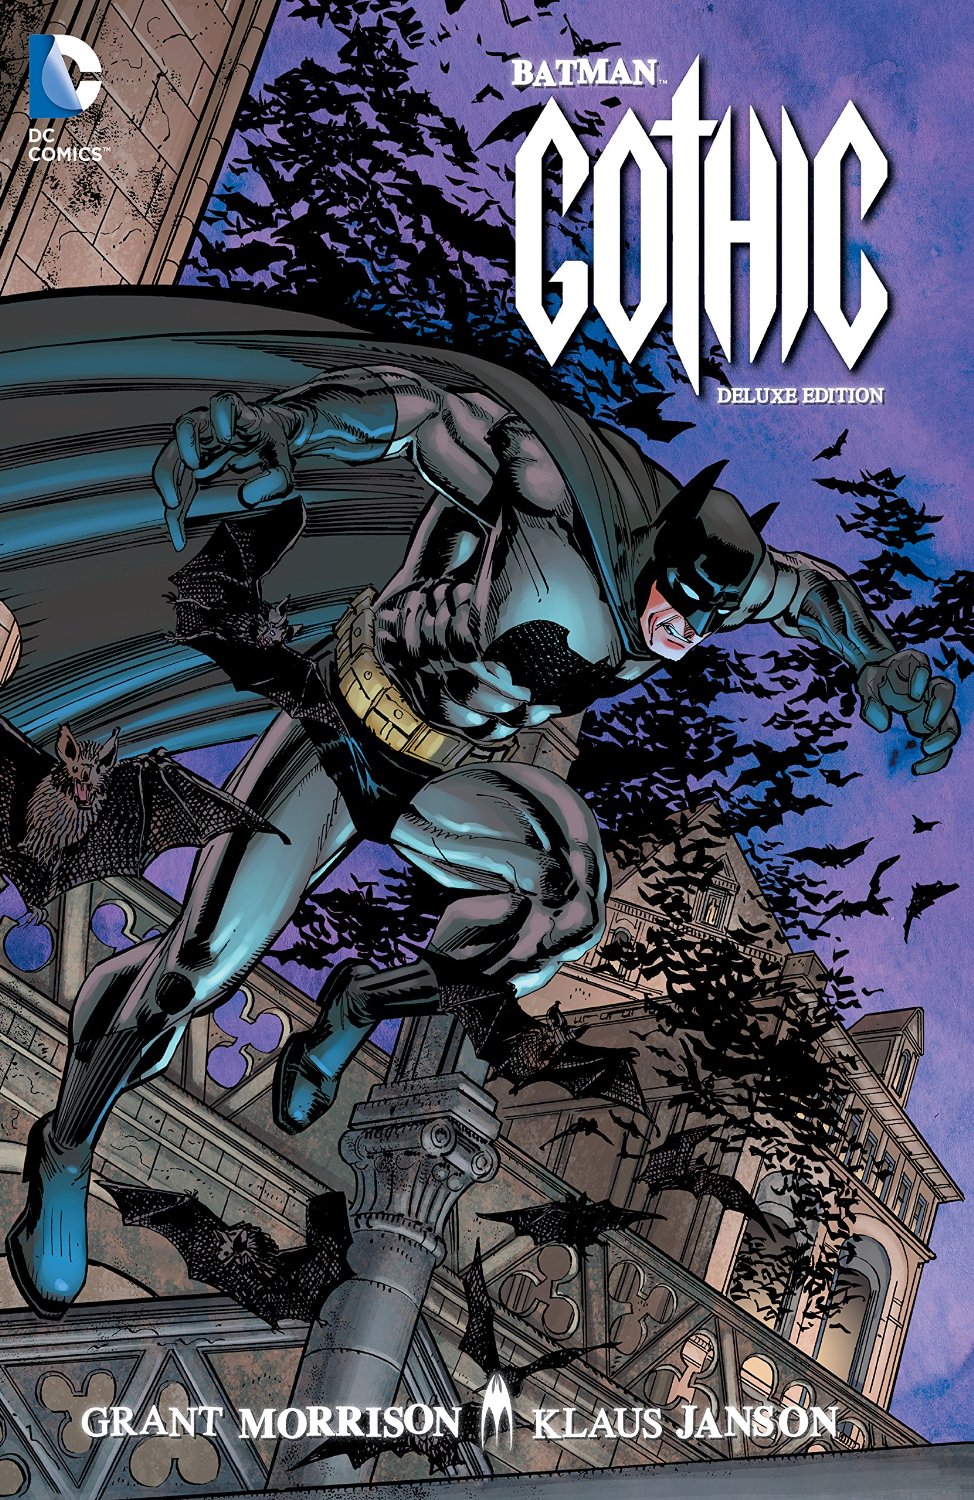 Batman_Gothic_Deluxe_Edition.jpg